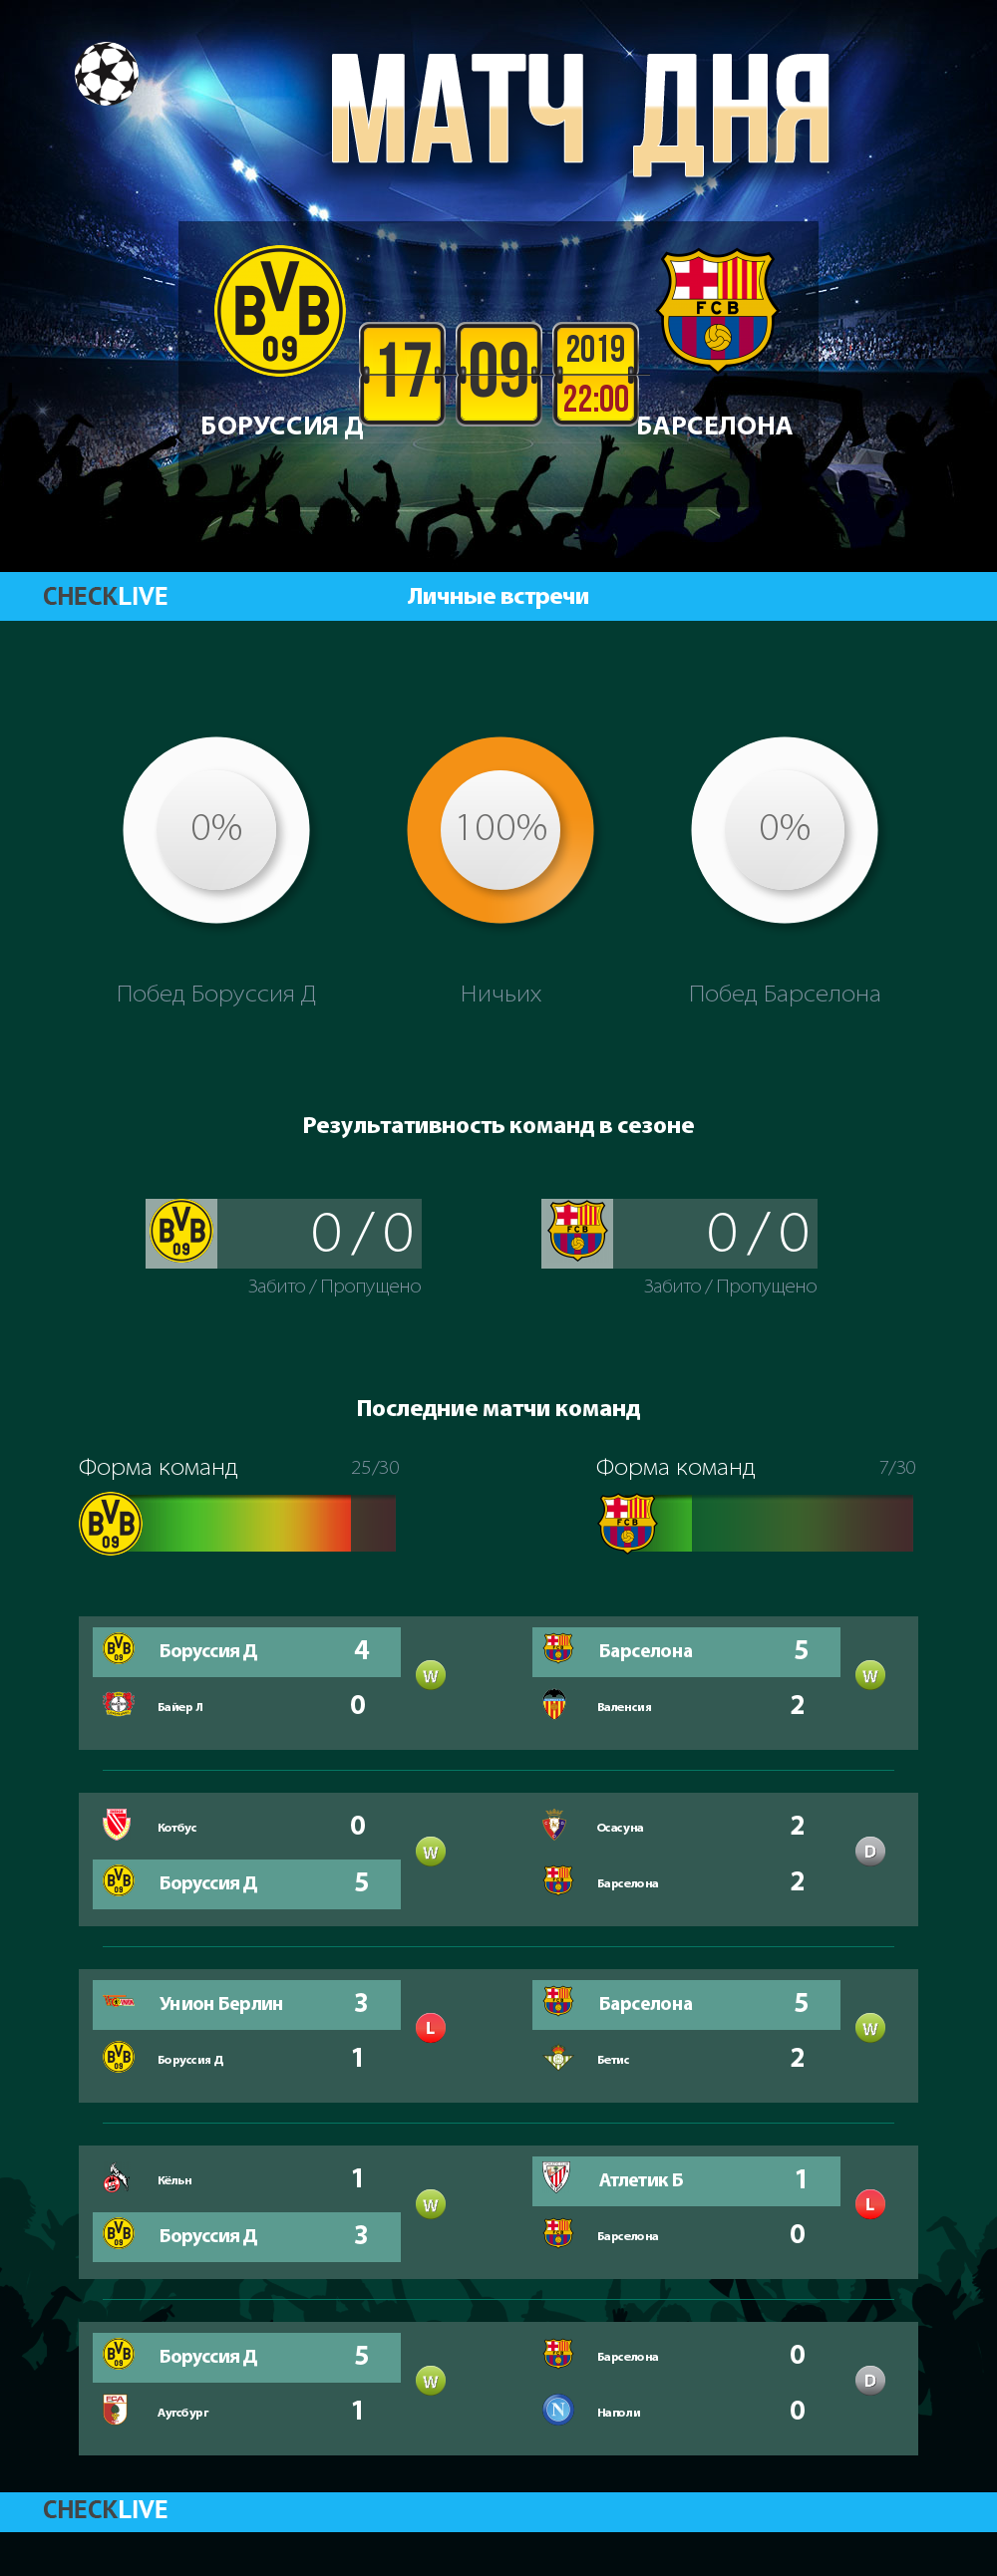 Инфографика Боруссия Д и Барселона матч дня 17.09.2019